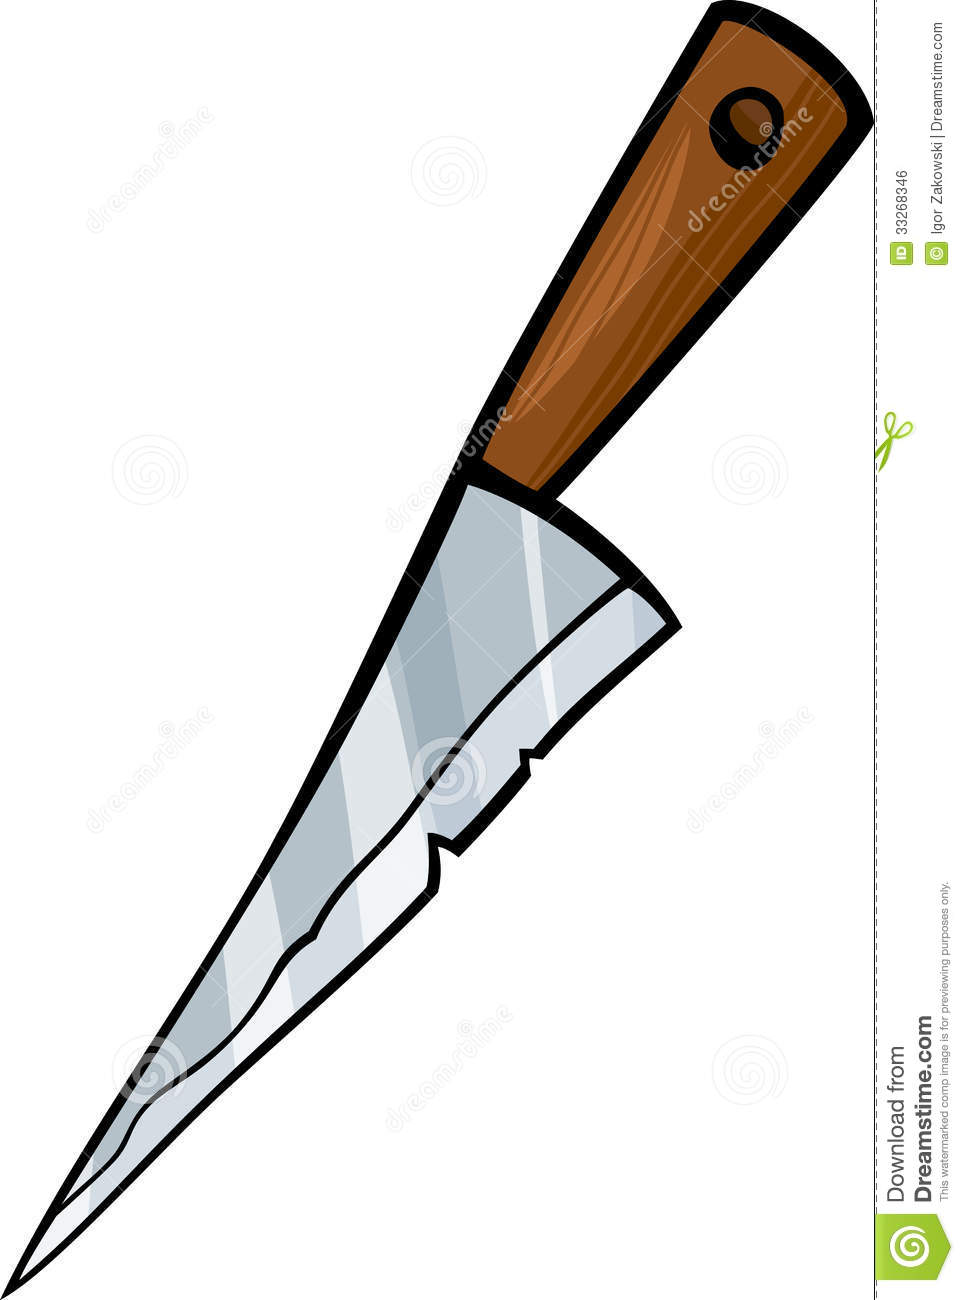 Knife Clip Art Knife Clip Art Cartoon Illustration Kitchen 33268346